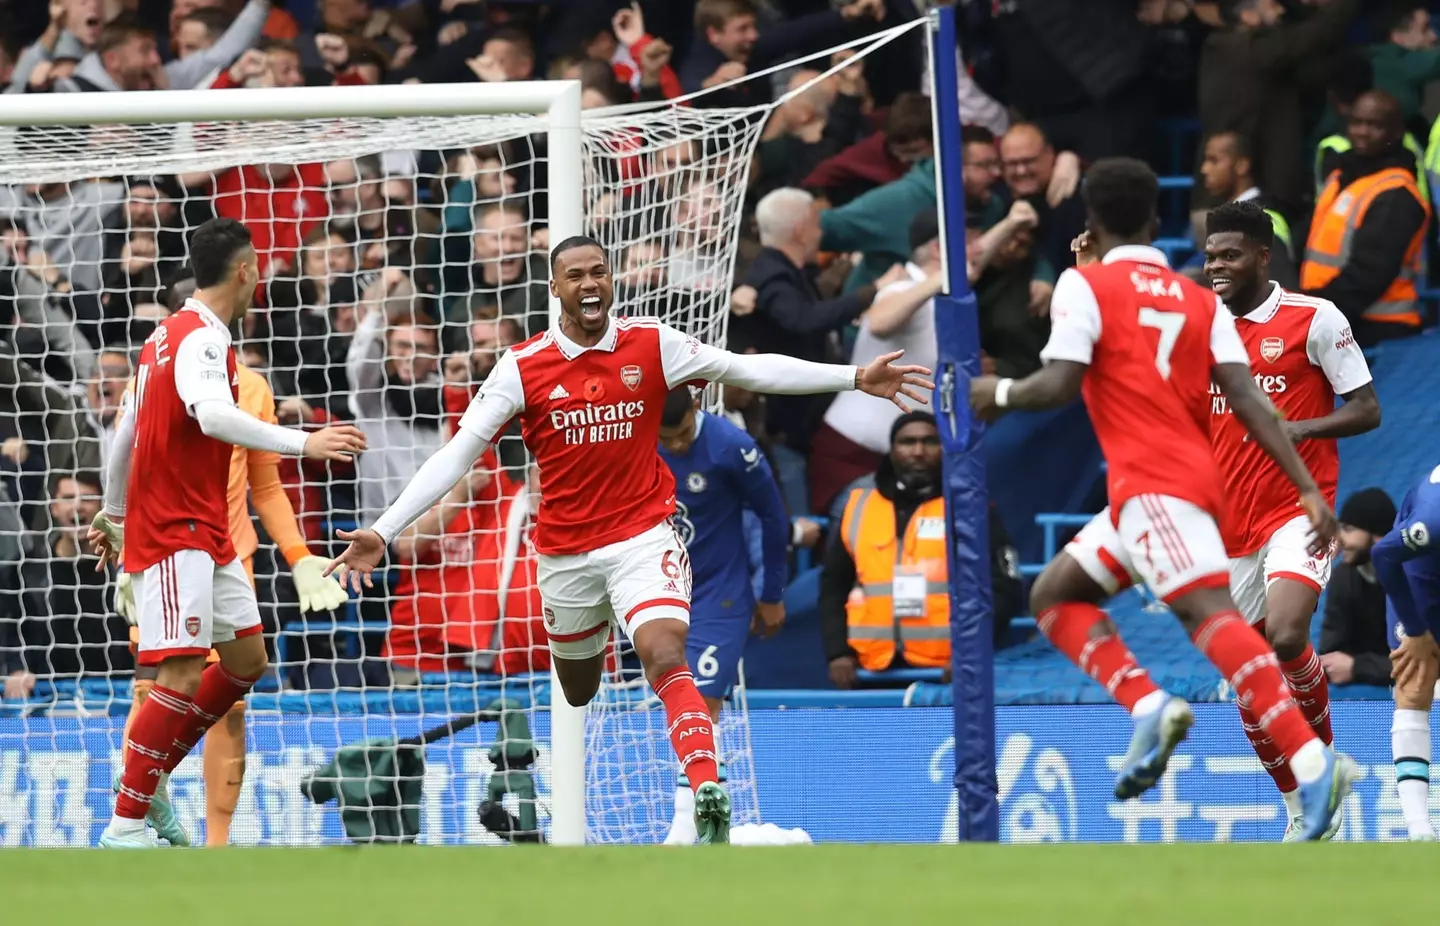 Arsenal defender Gabriel celebrates his goal against Chelsea on Sunday. (Image